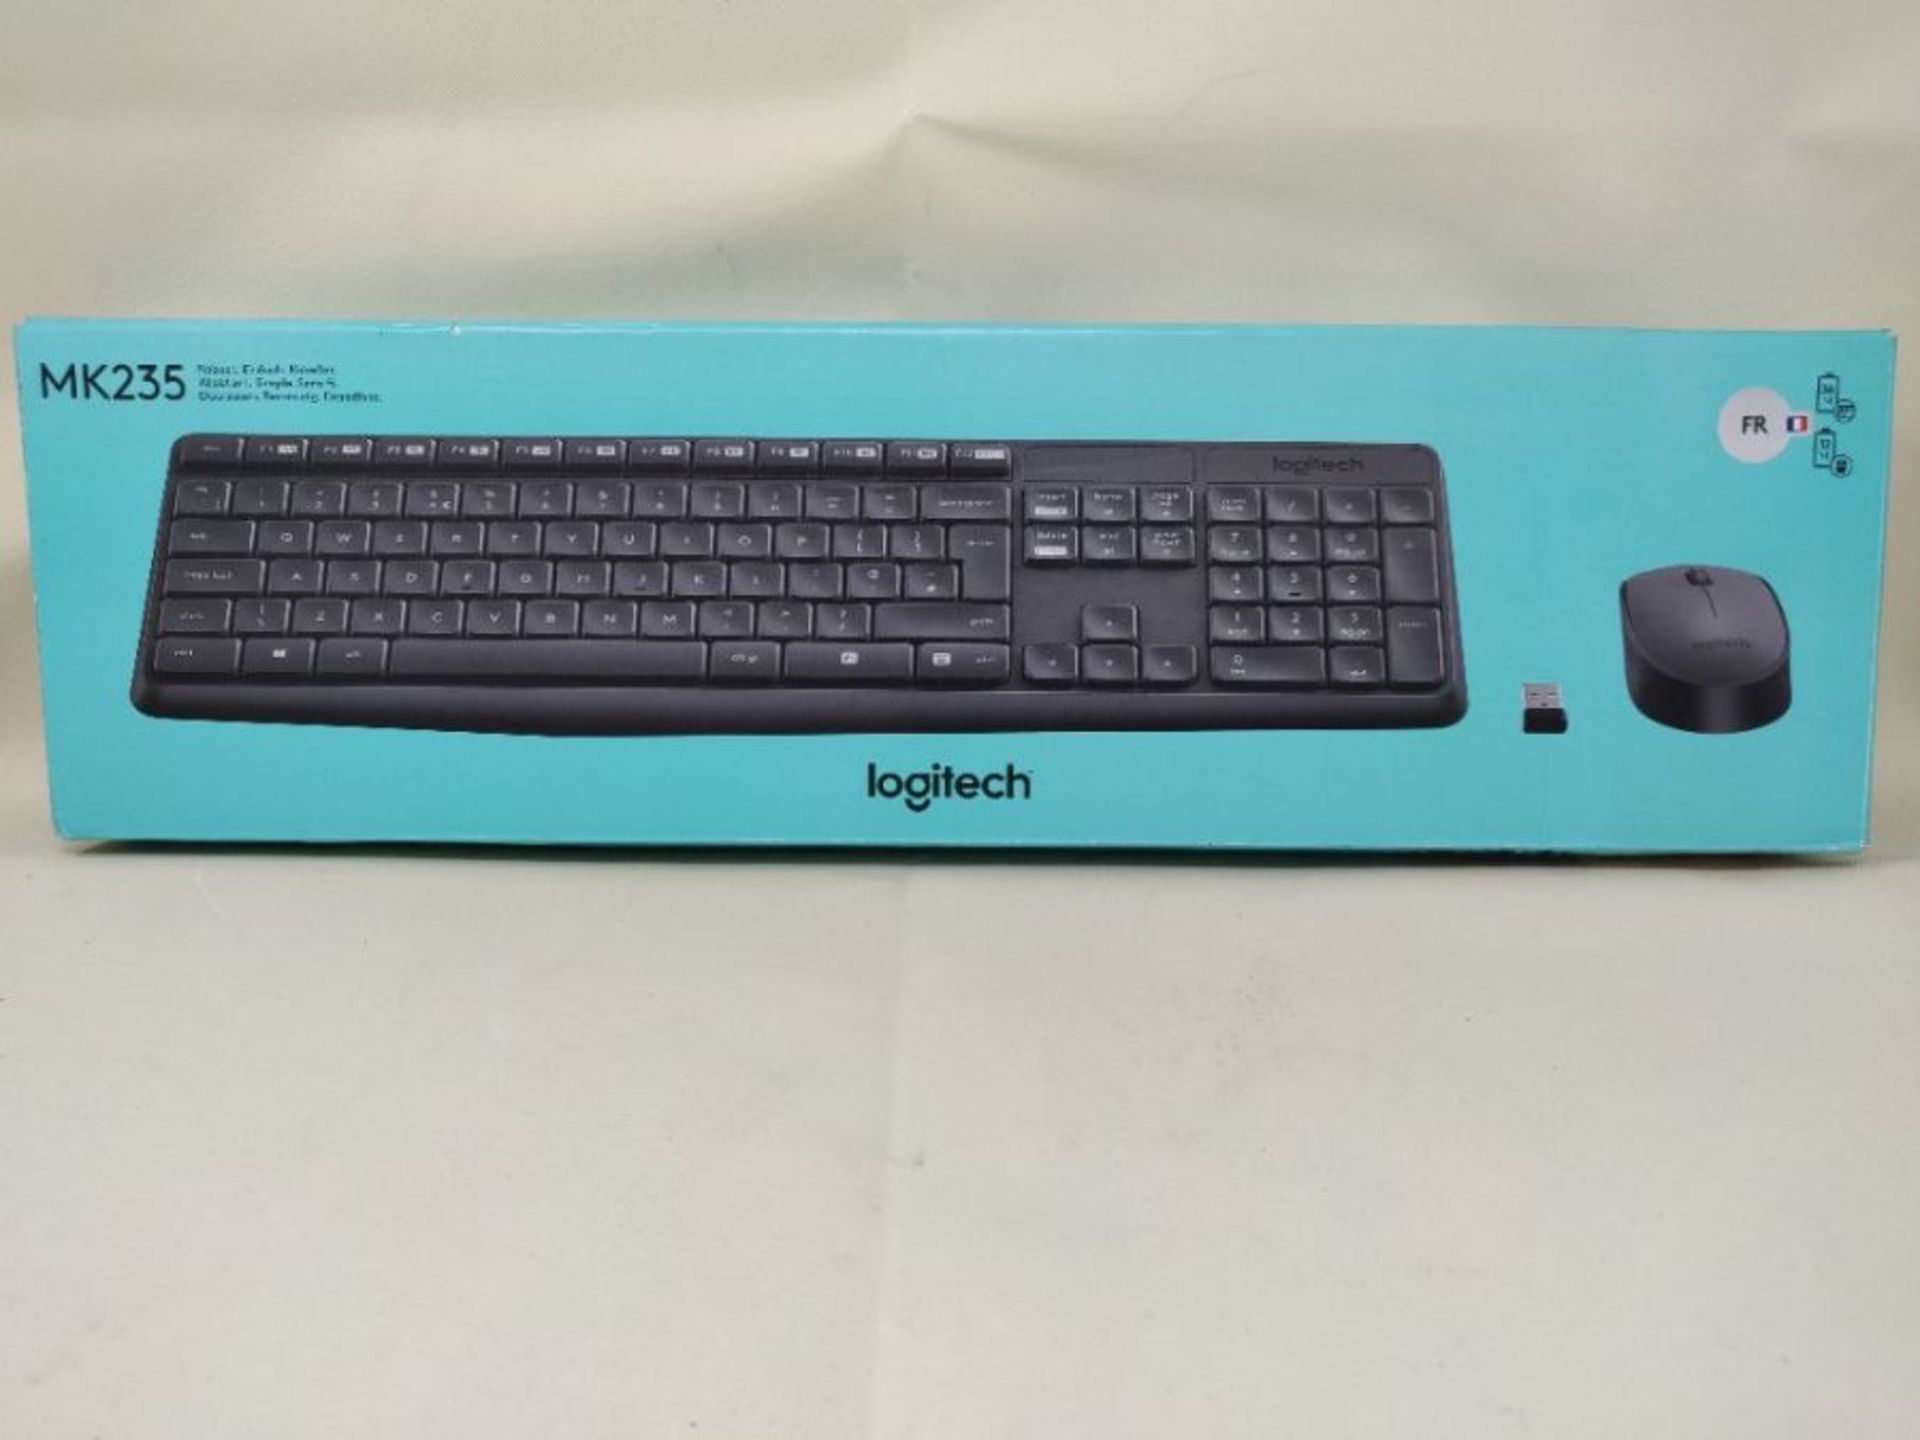 Logitech MK235 Wireless Keyboard and Mouse Combo, AZERTY French Layout - Black - Image 5 of 6